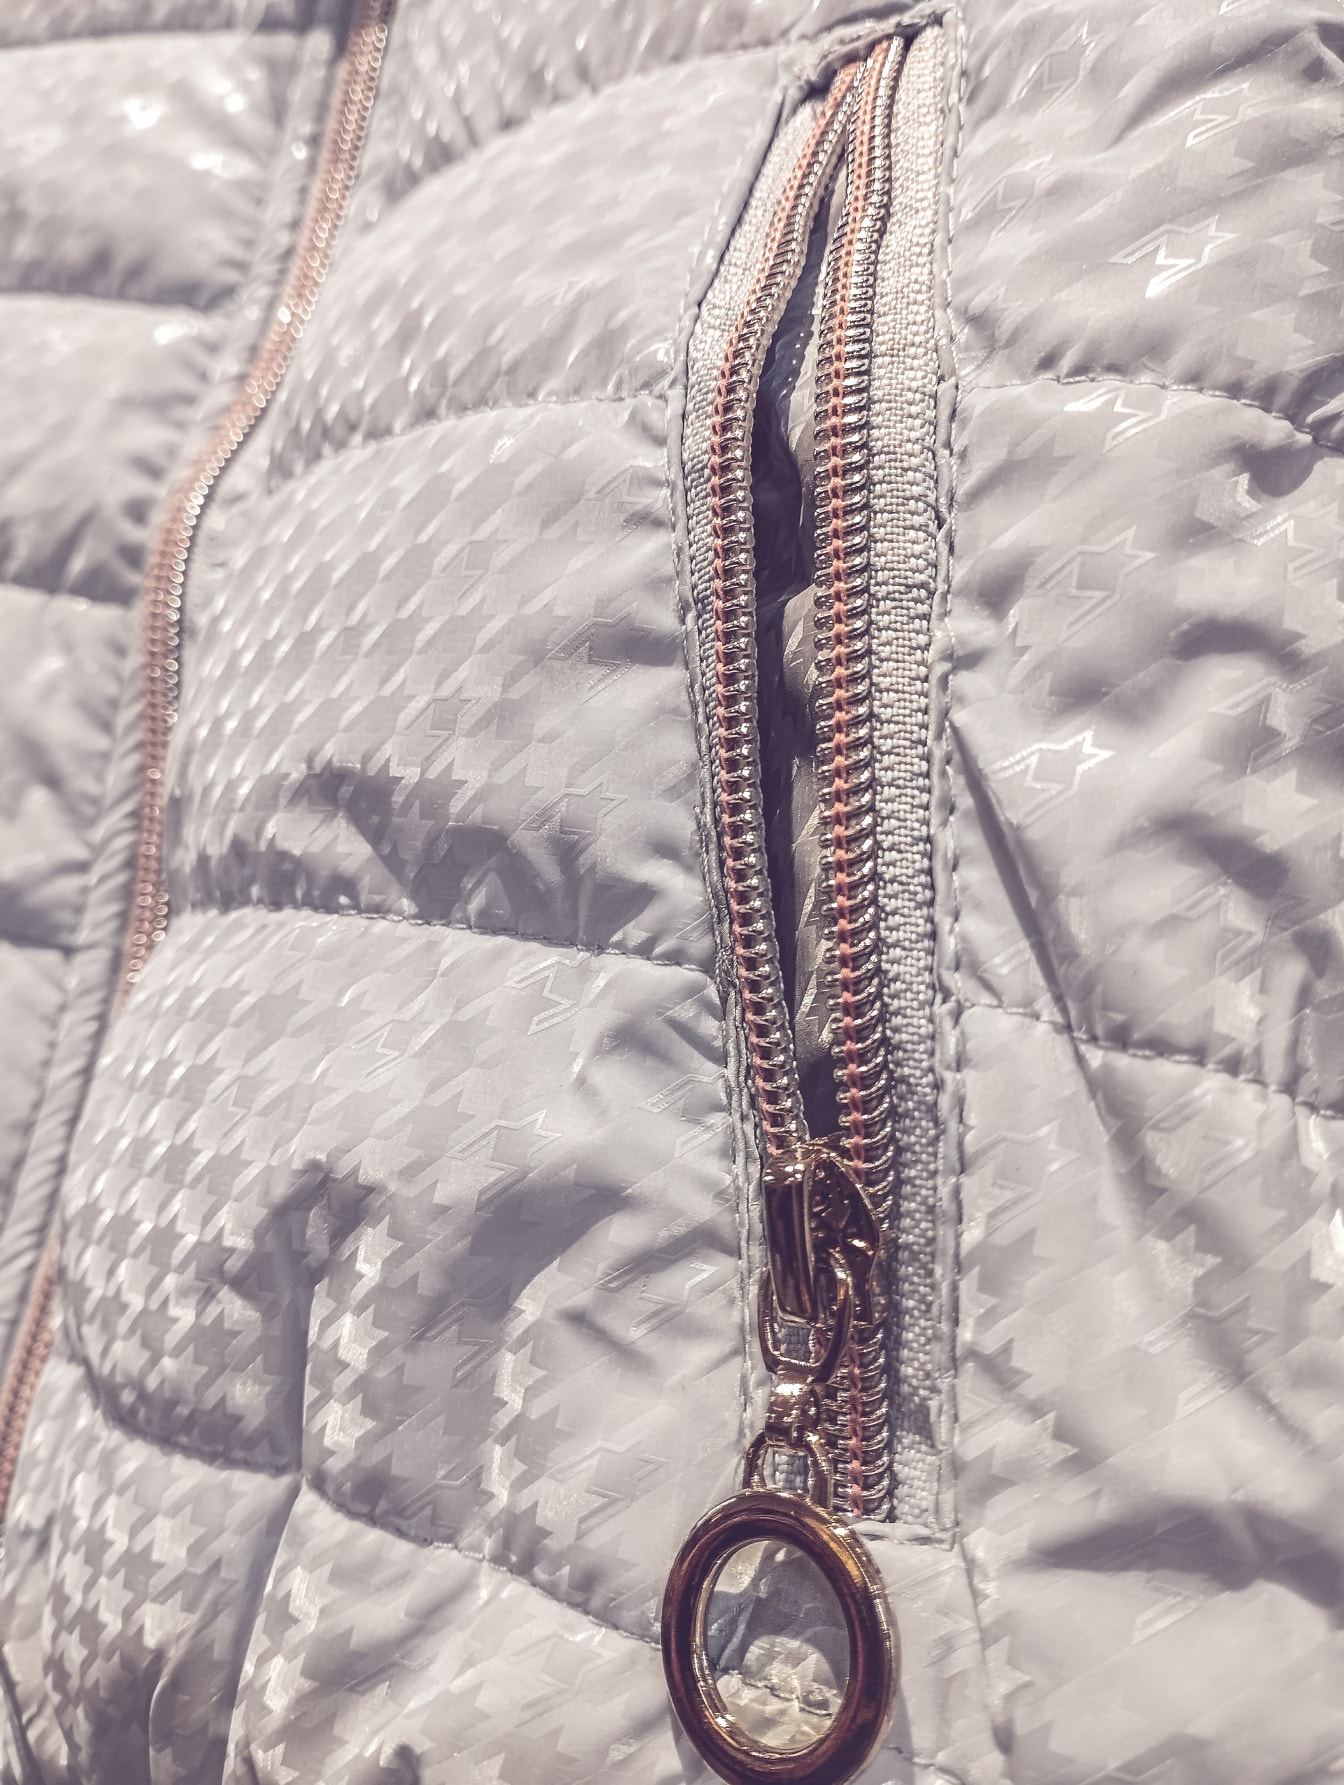 Close-up of pocket zipper on grey fancy jacket